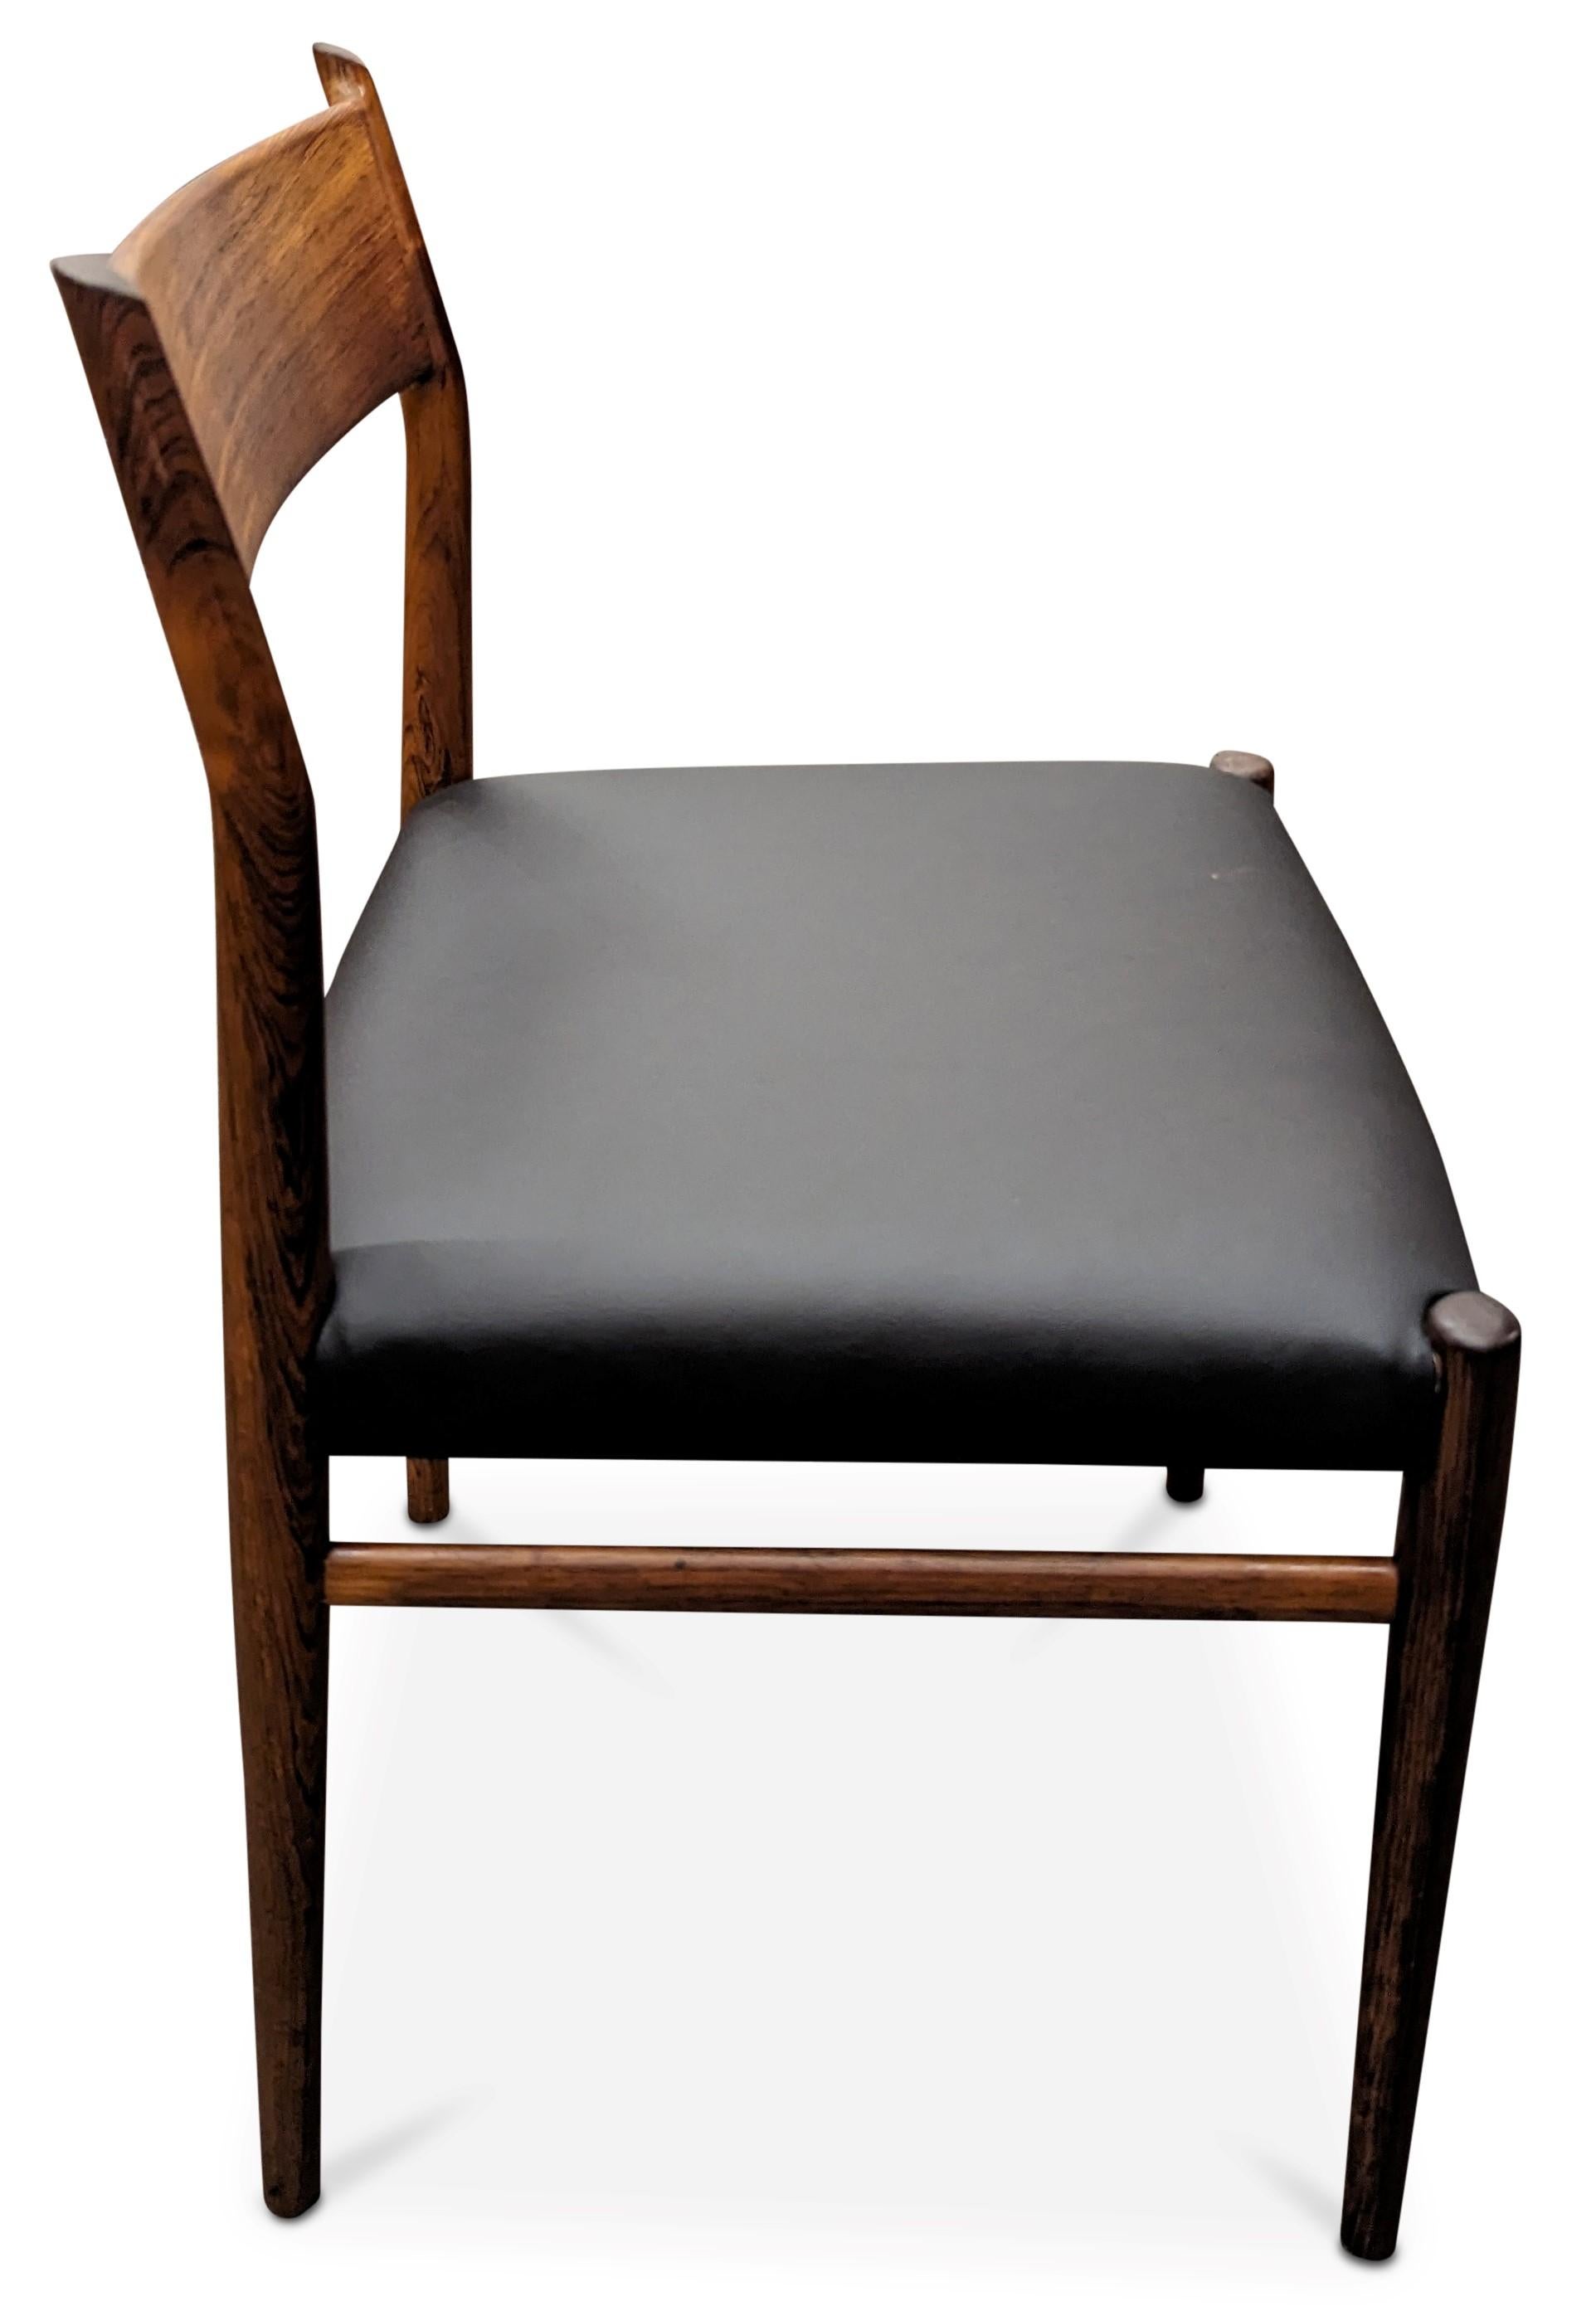 Mid-20th Century Vintage Danish Arne Vodder for Sibast Mobler Rosewood Dining Chair - 082316 For Sale